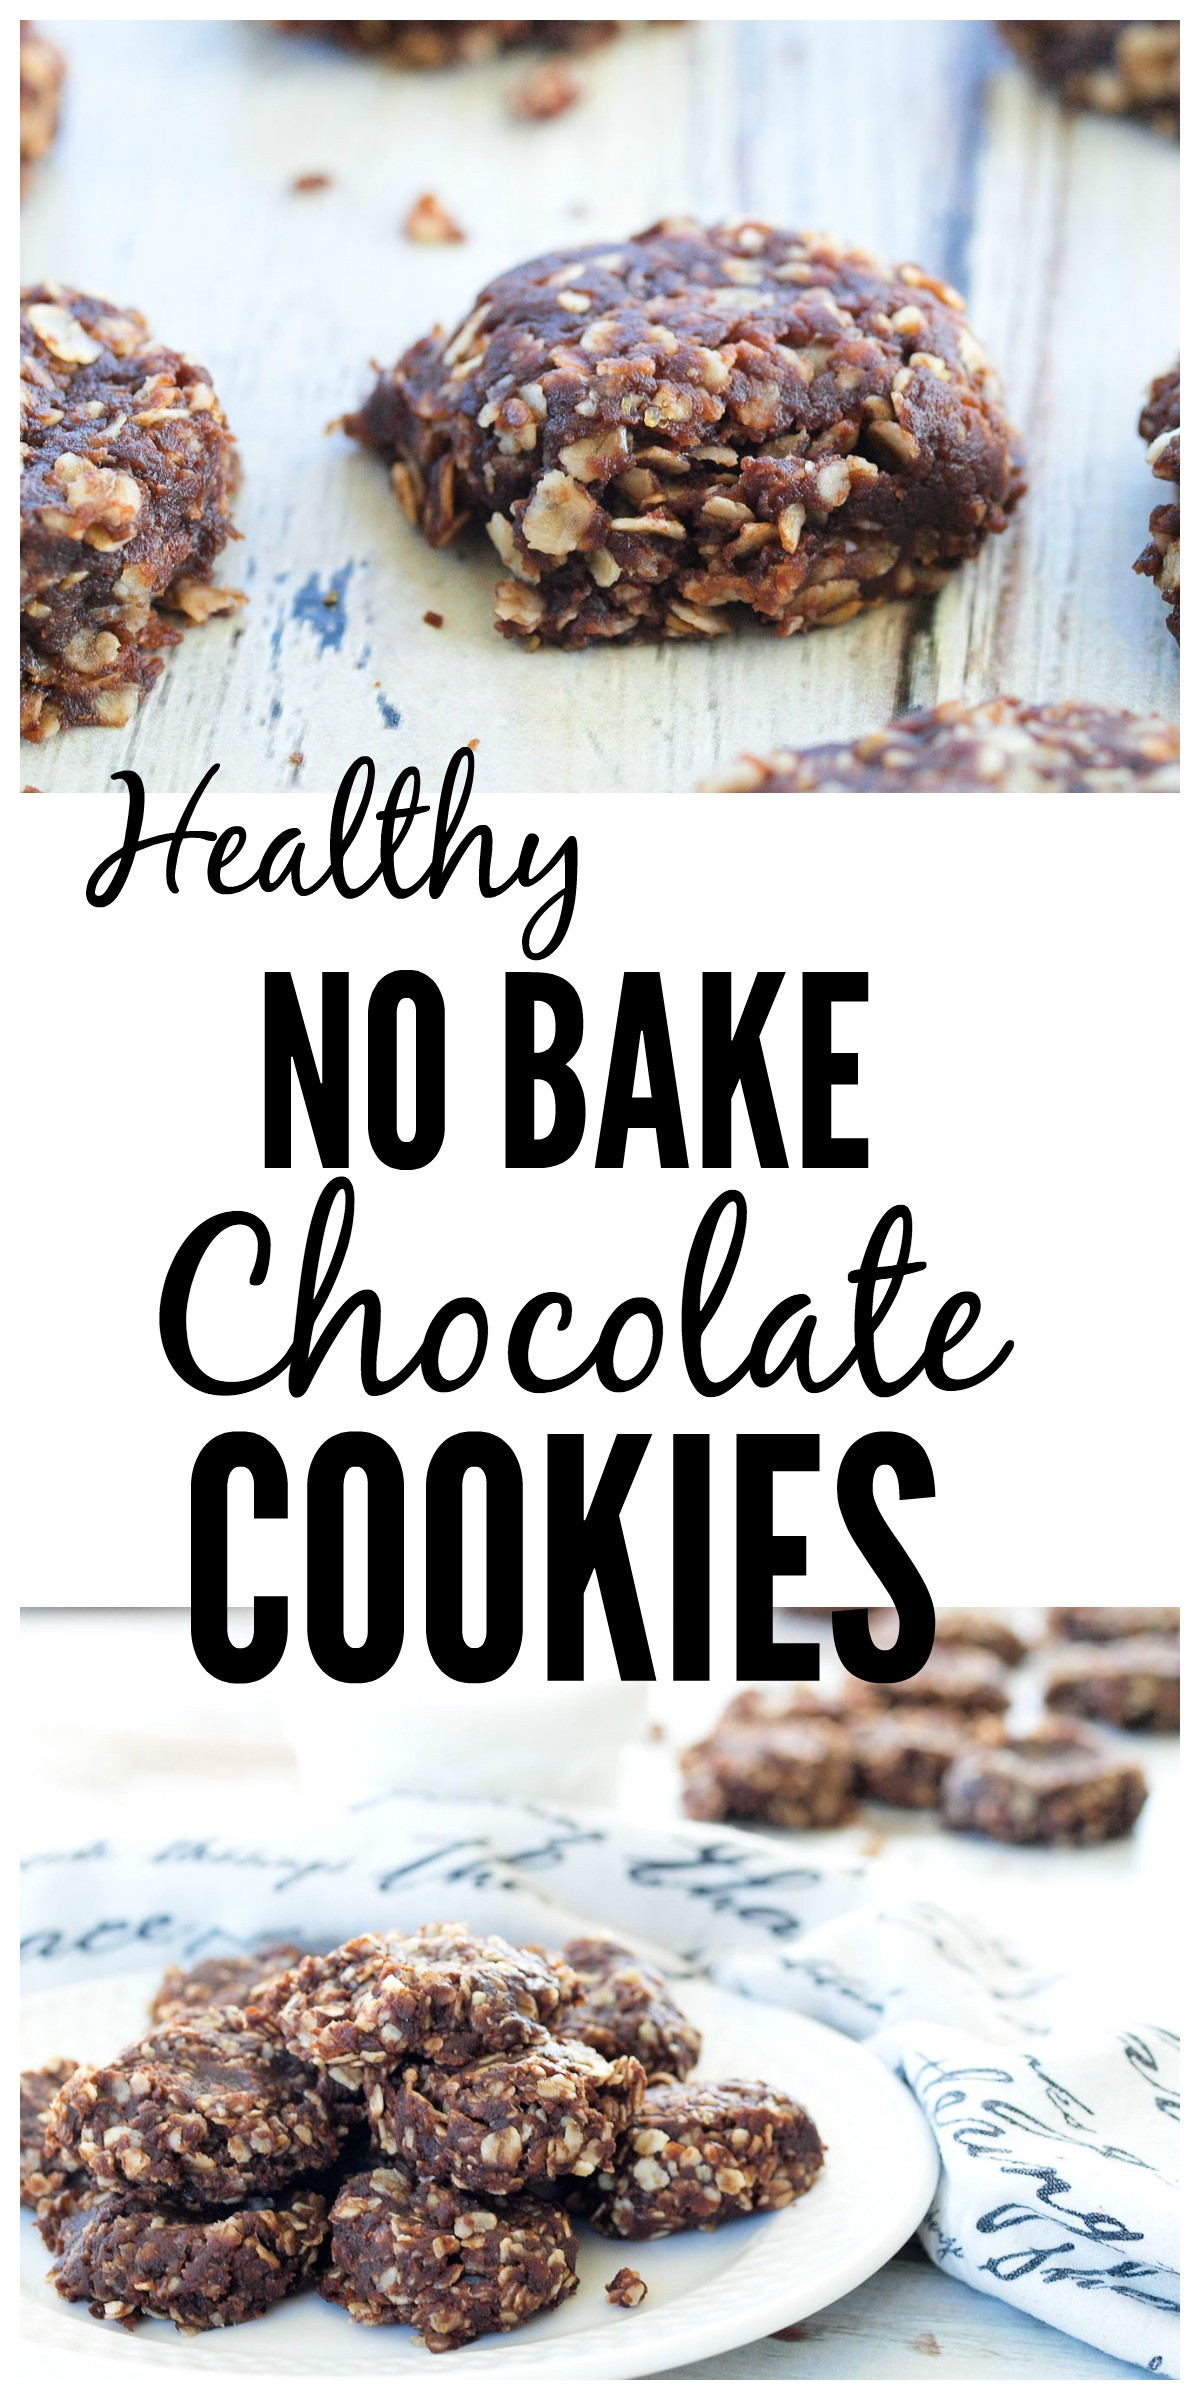 Healthy Chocolate No Bake Cookies
 Healthy No Bake Chocolate Cookies